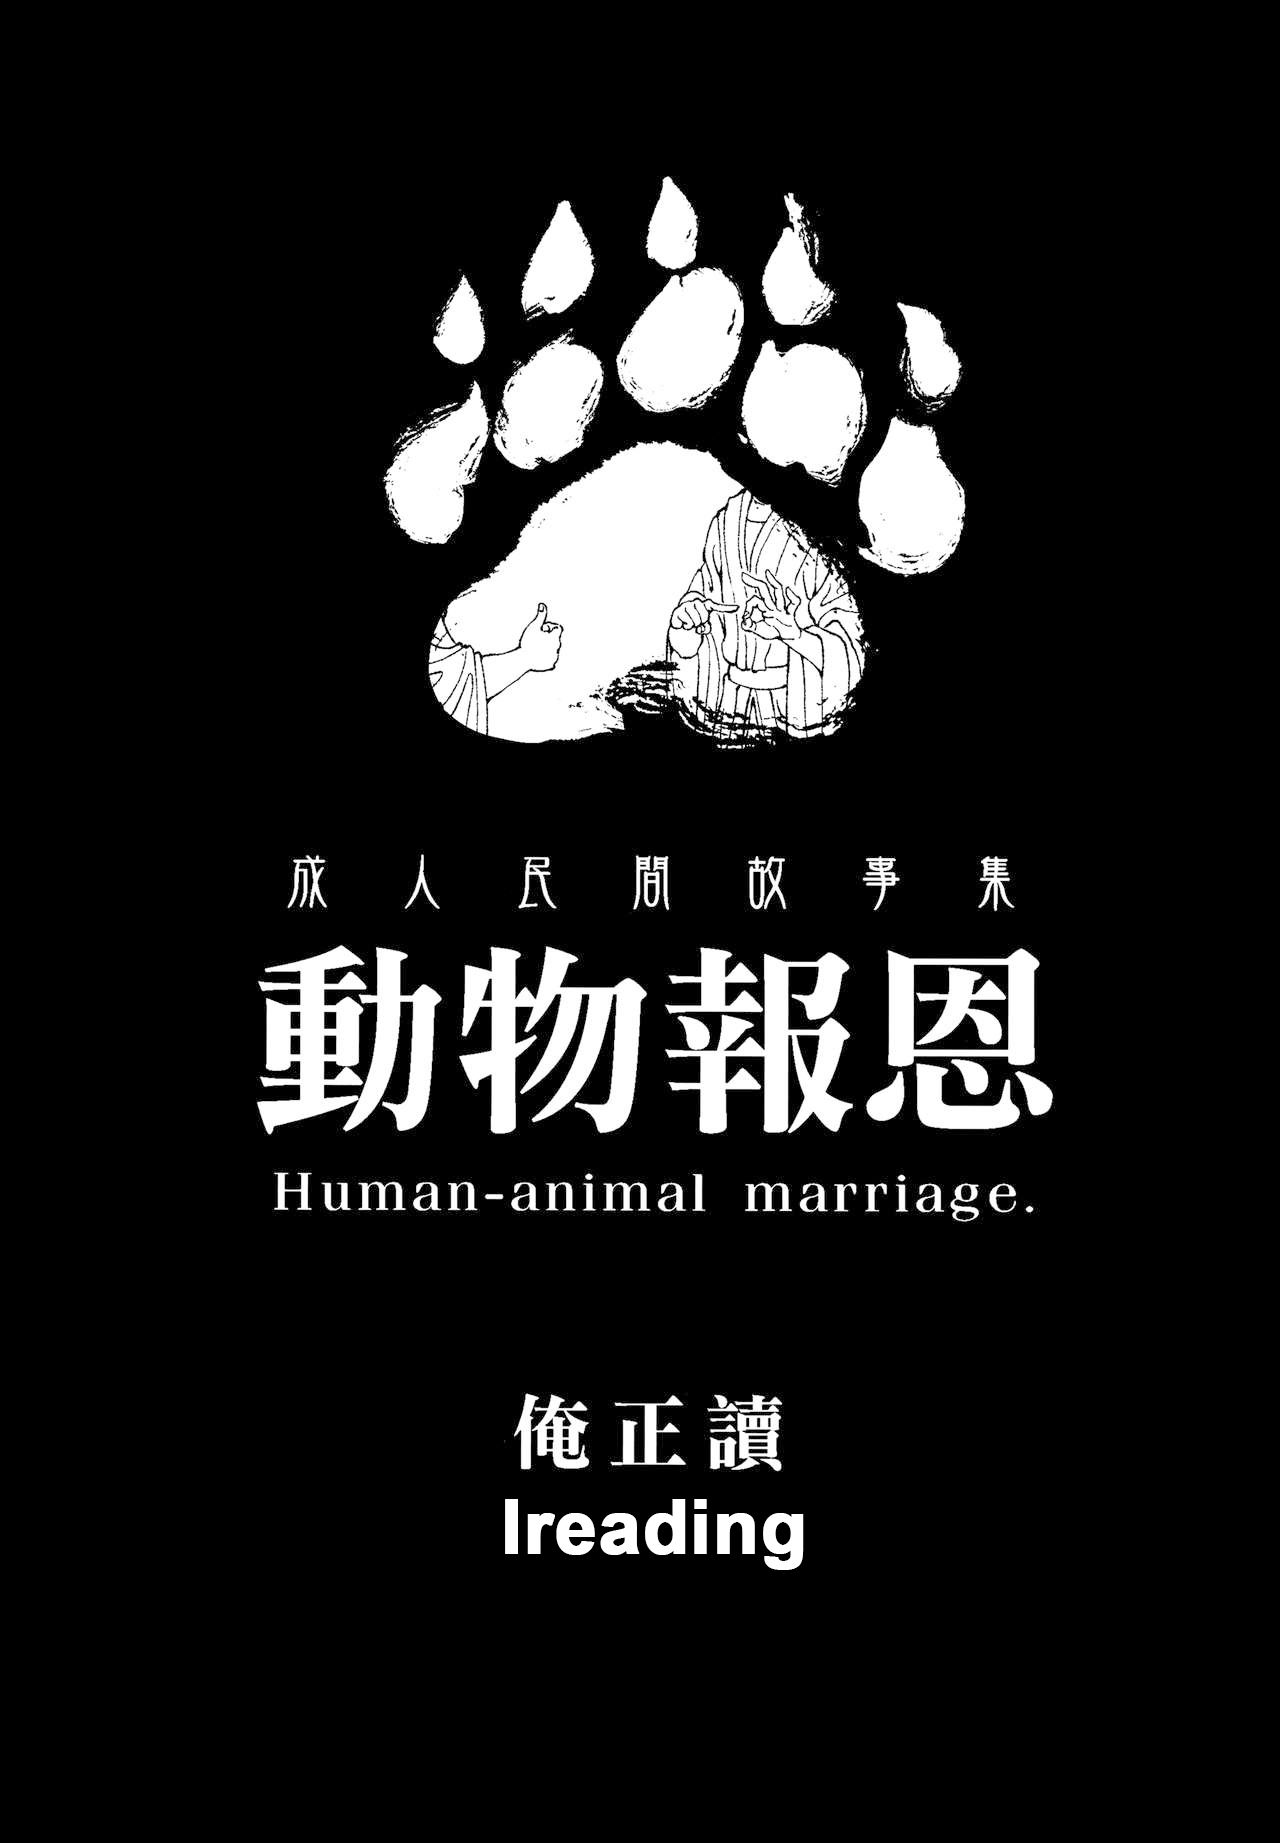 Human-animal marriage - 1